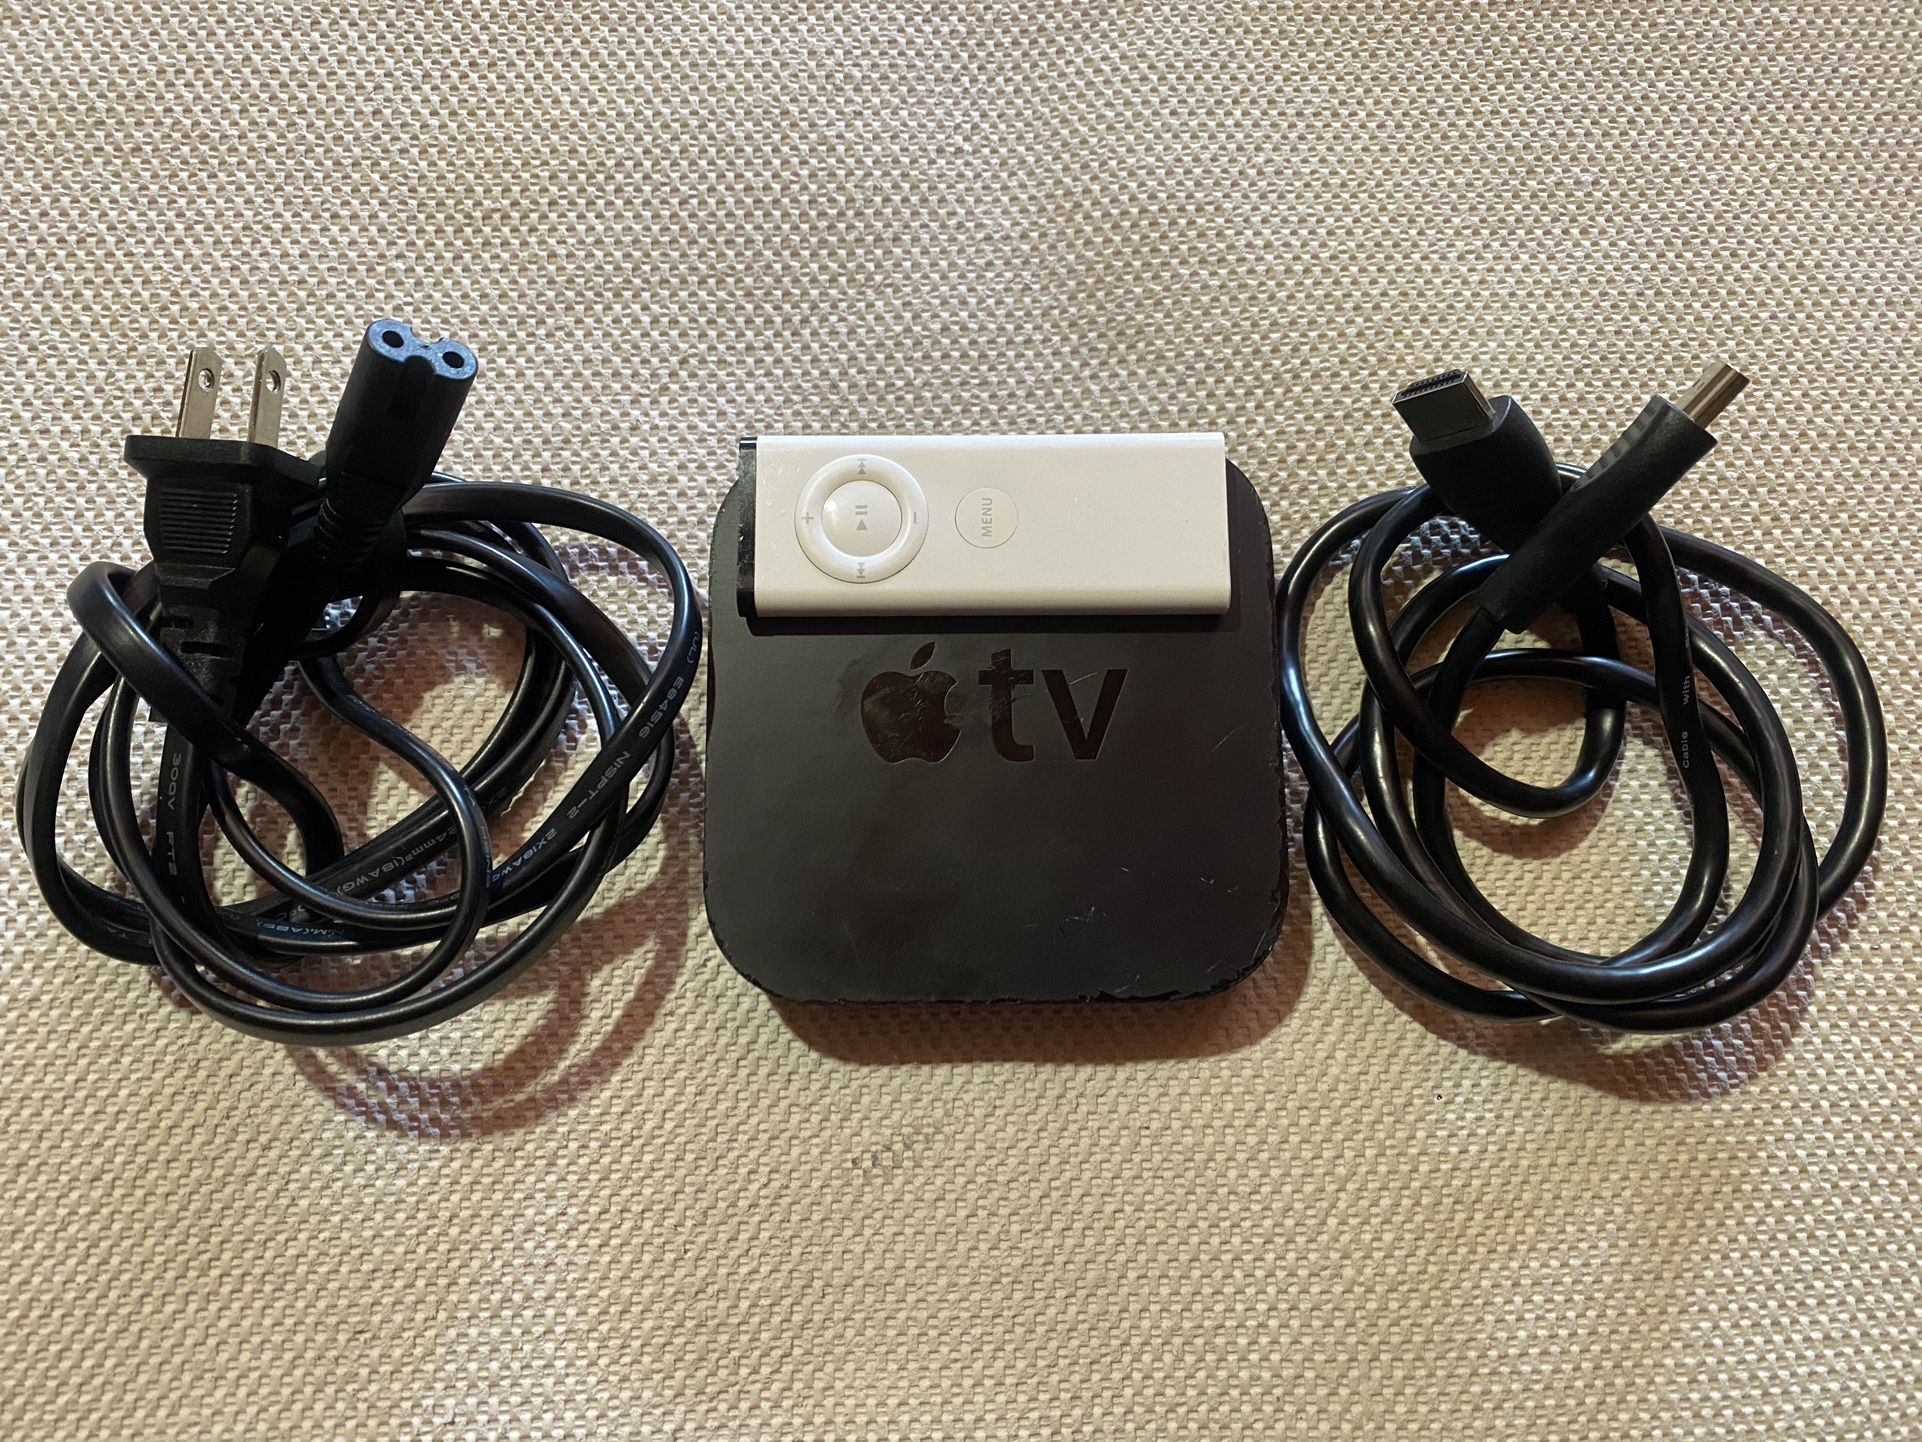 Apple TV (3rd Generation)